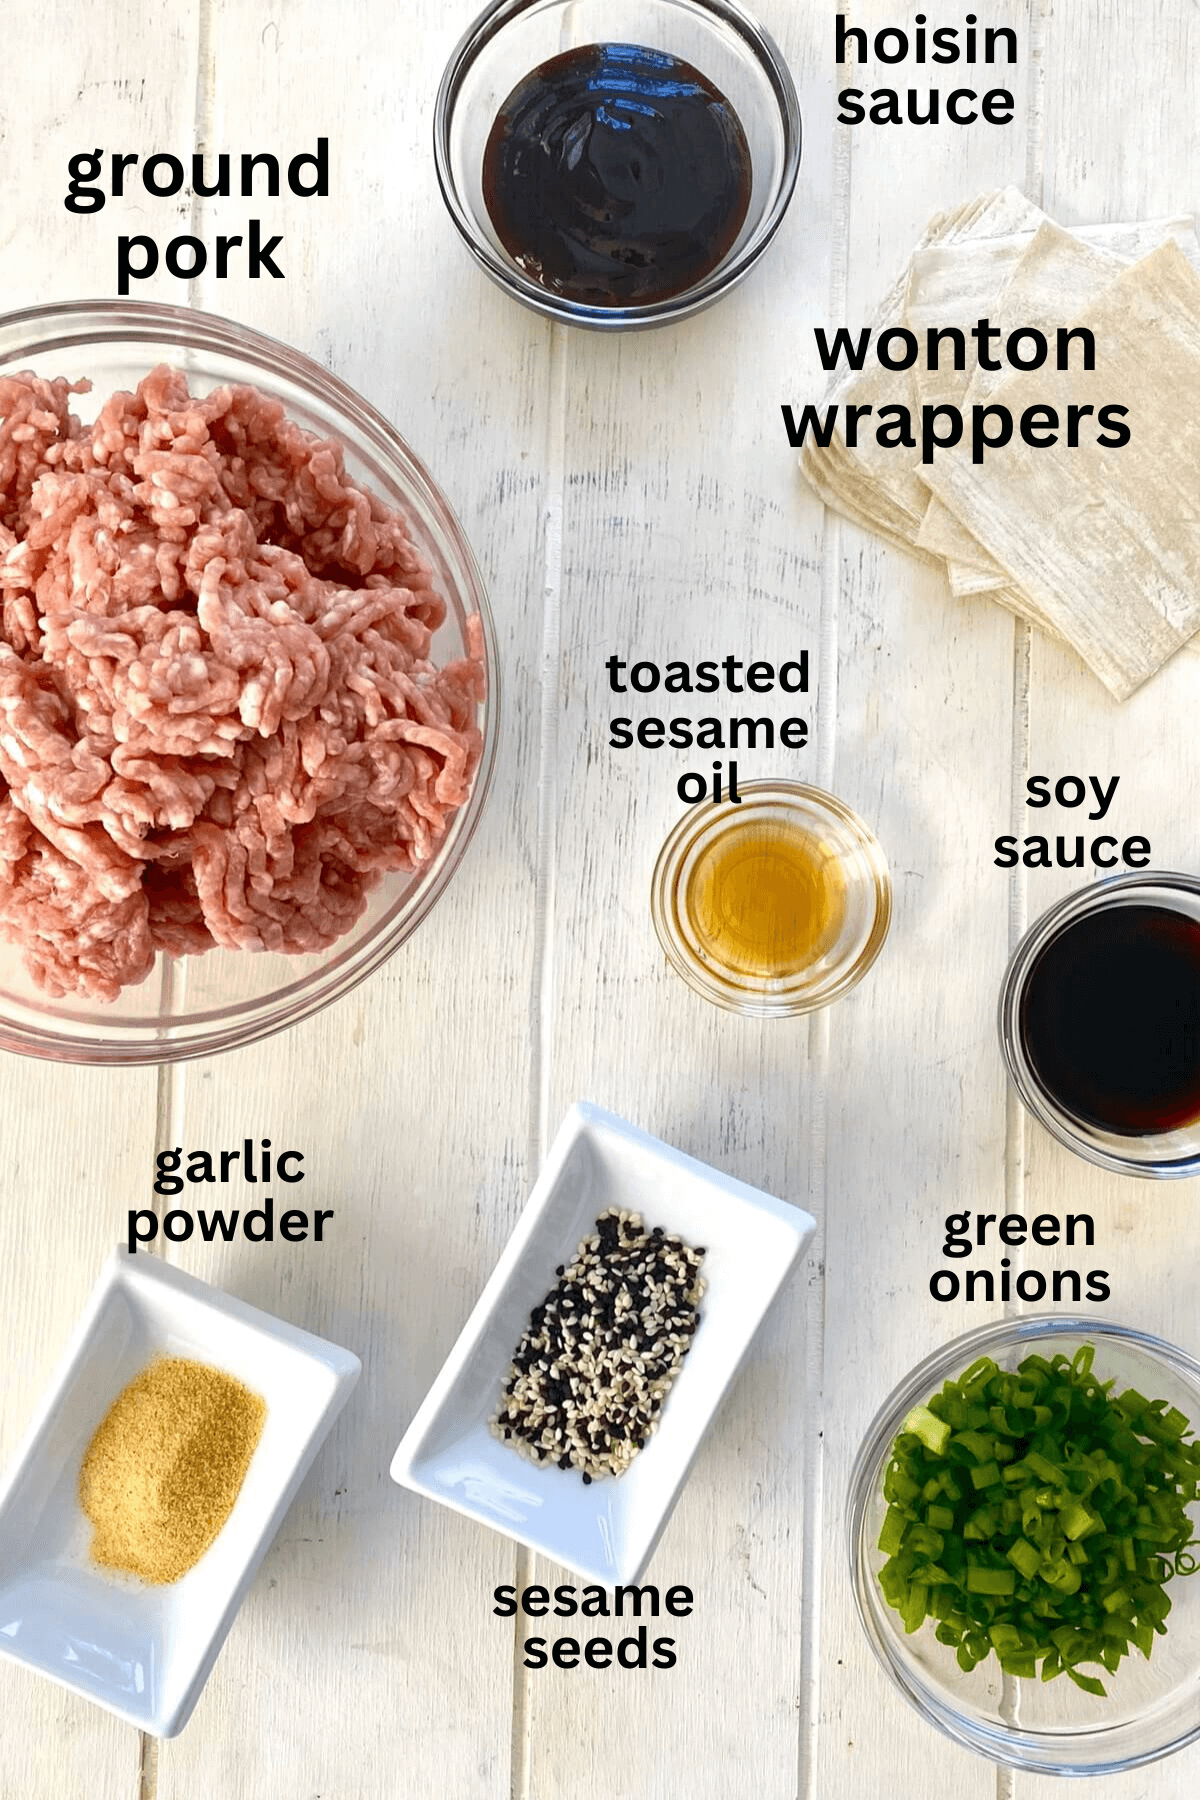 ground pork, soy sauce, hoisin sauce, green onions, garlic powder, wonton wrappers, sesame seeds, toasted sesame oil.